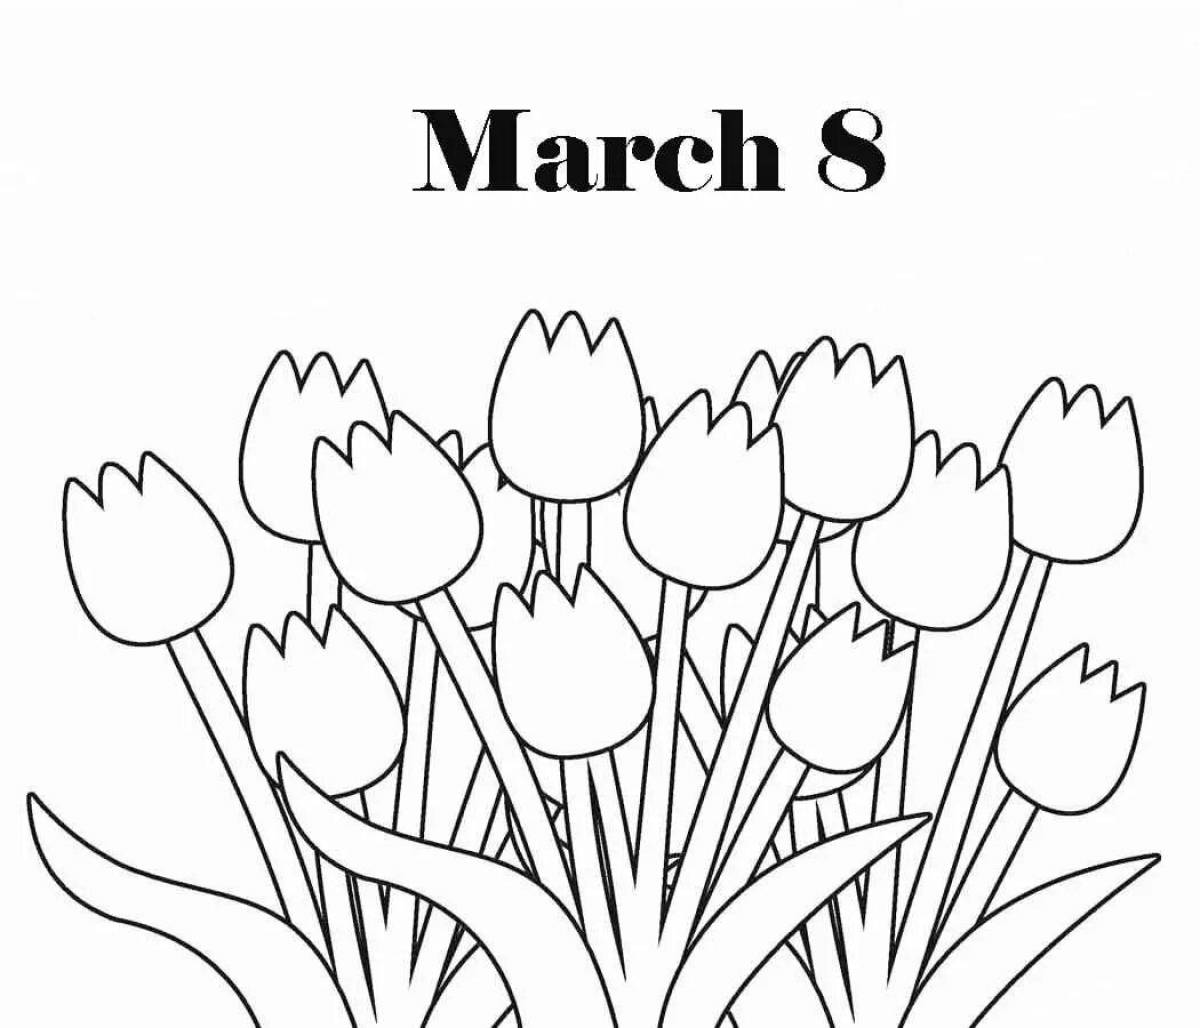 8 march worksheets for kids. Раскраска ко Дню матери. Раскраска с днем рождения мама. Открытка для мамы раскраска. Рисунок для мамы раскраска.